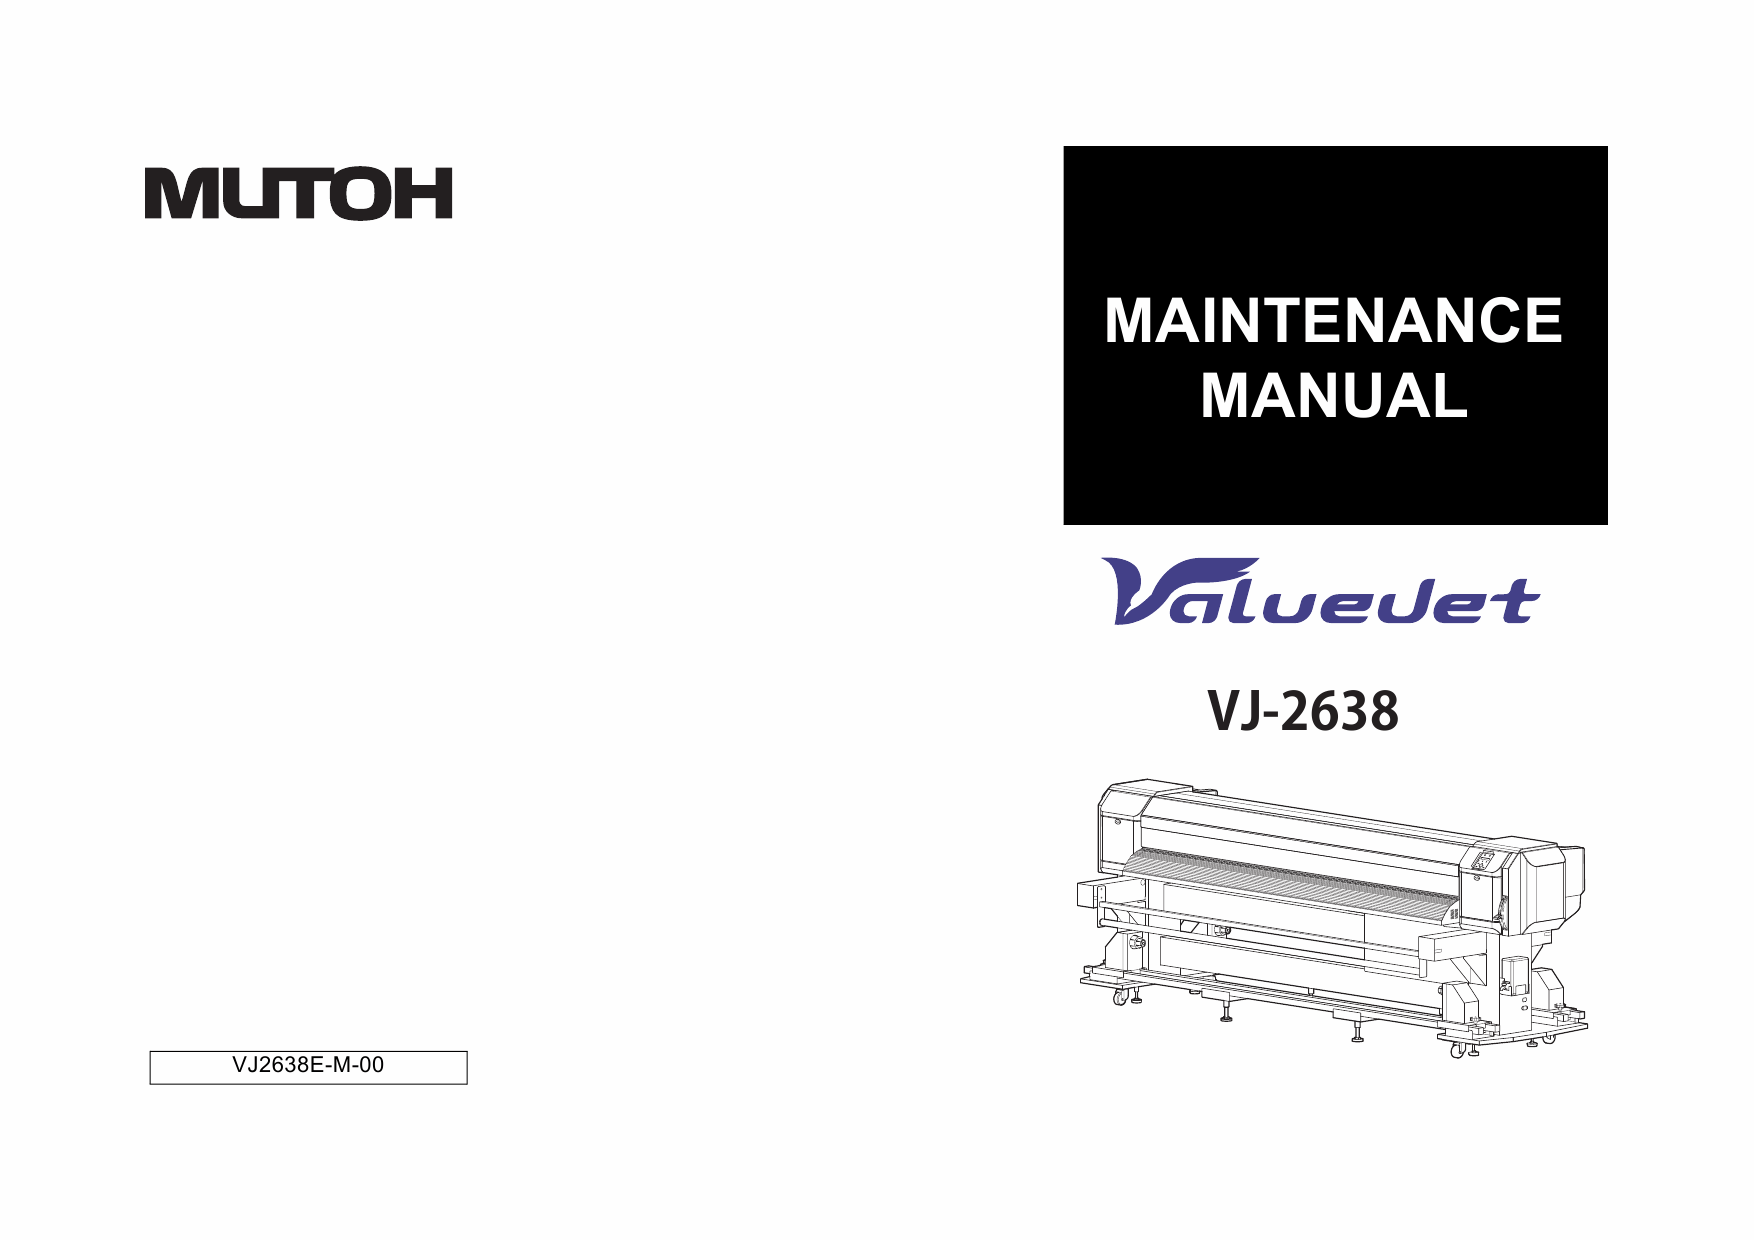 MUTOH ValueJet VJ 2638 MAINTENANCE Service and Parts Manual-1